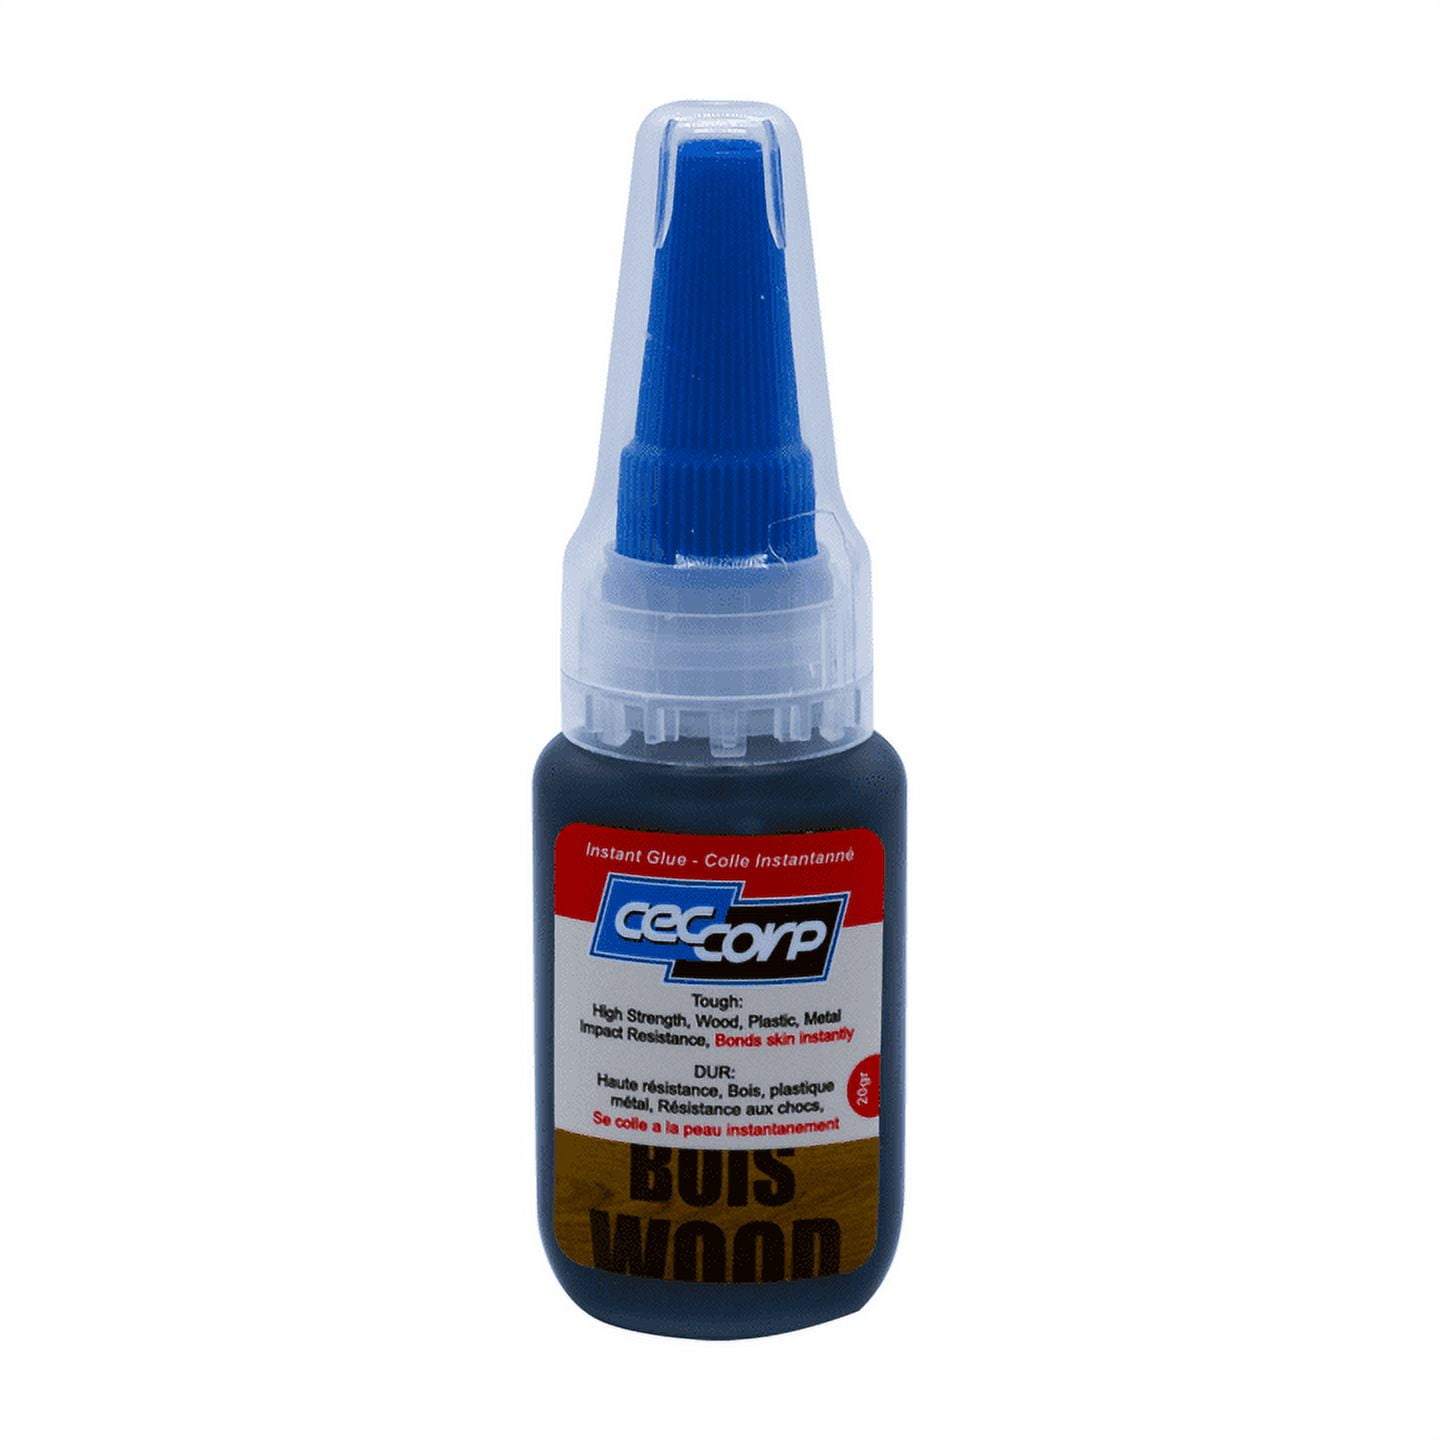 Reviews for 3M 14.6 oz. Hi-Strength 90 Spray Adhesive